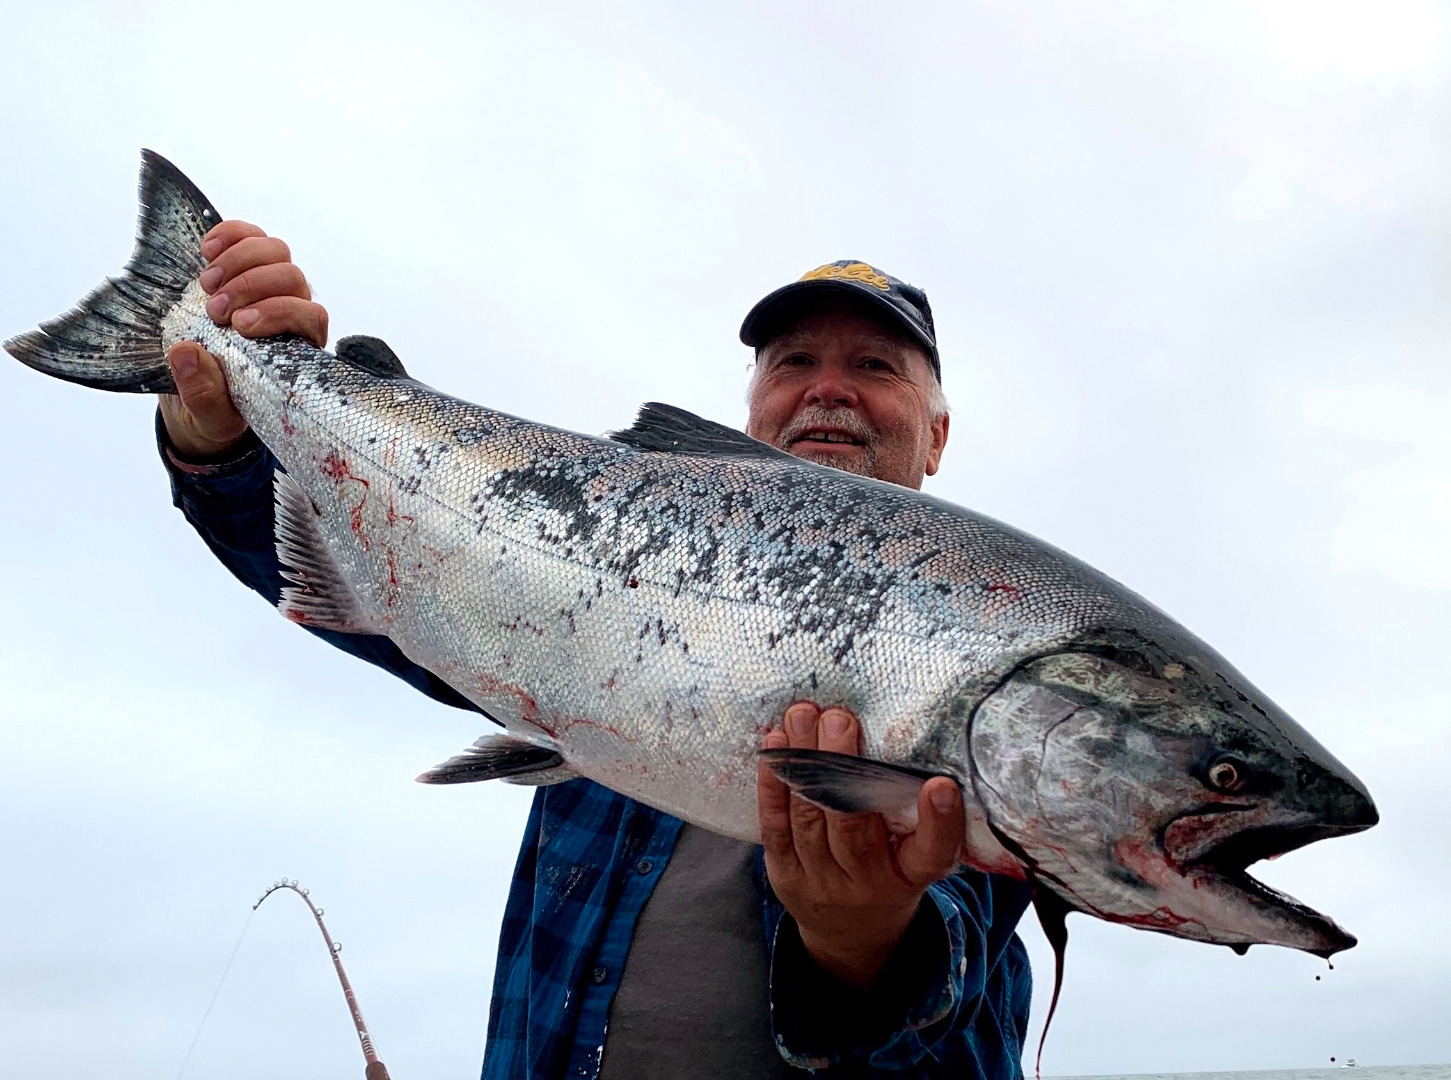 King Salmon Season Resumes Soon in Monterey Bay Area